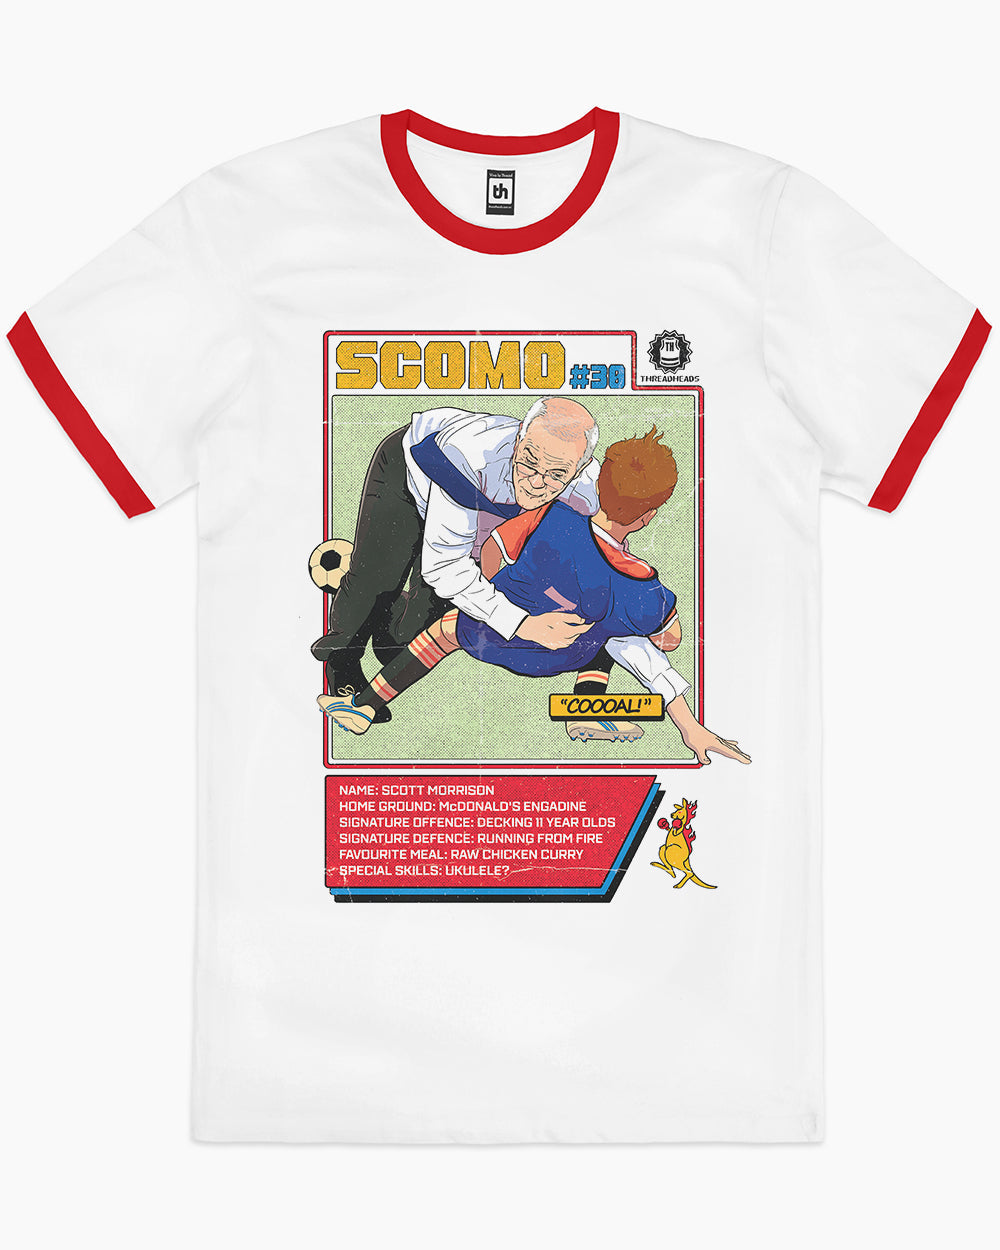 Scomo Tackle T-Shirt, Funny Aussie T-Shirt Australia